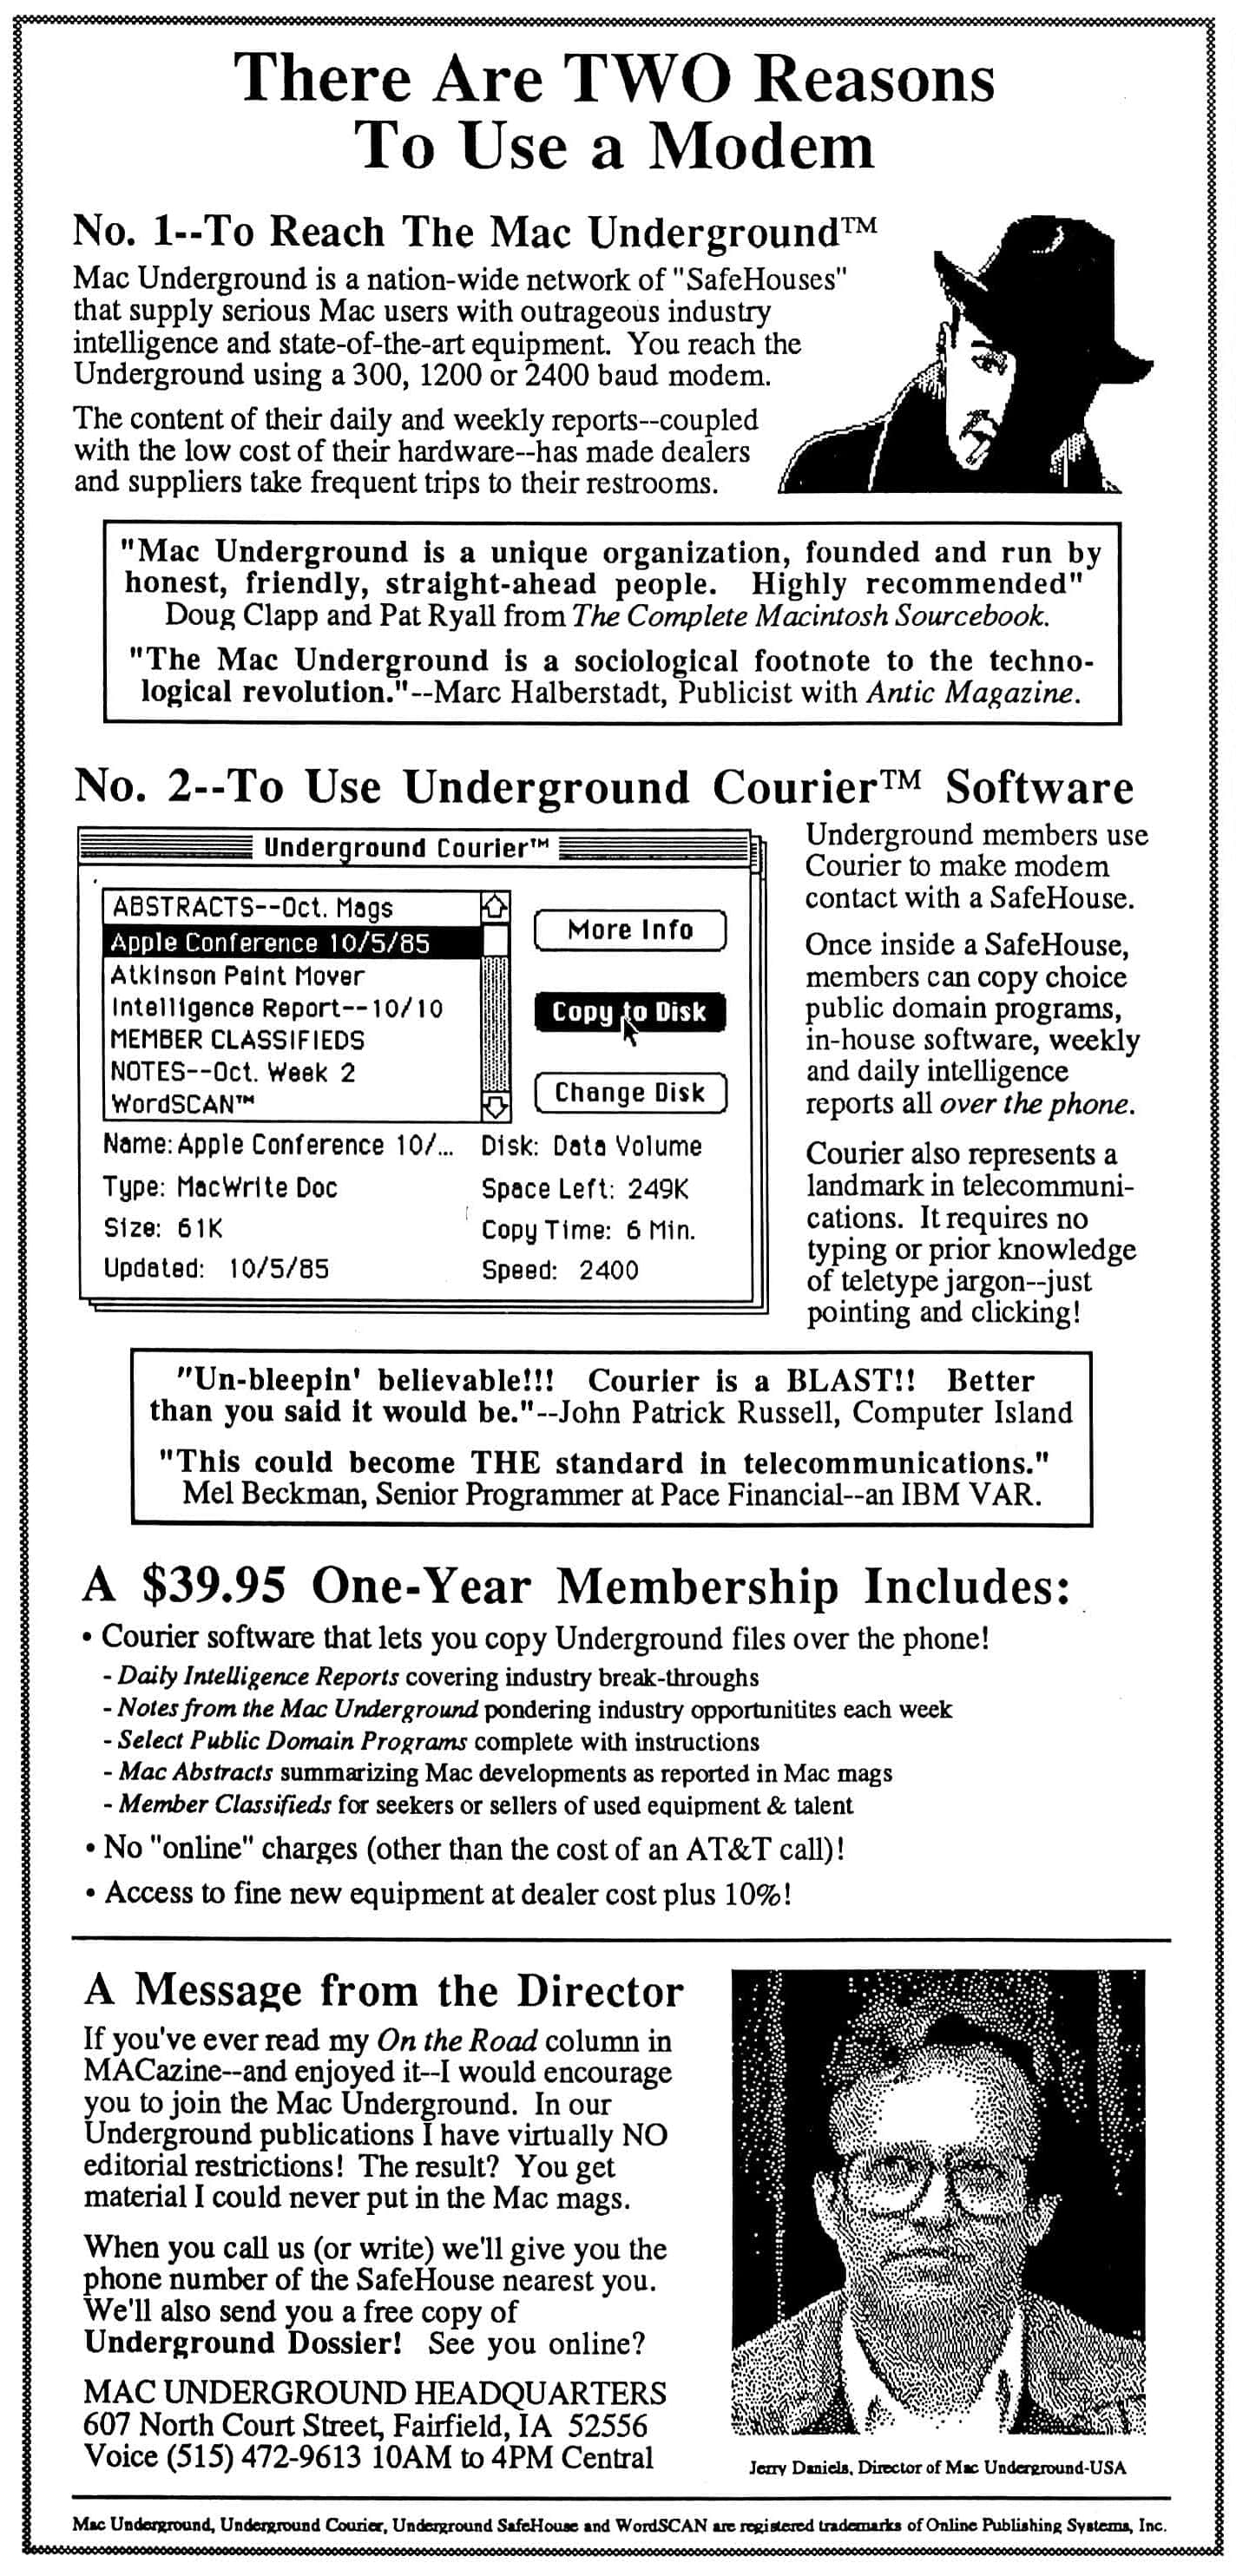 Mac Underground and Courier Software